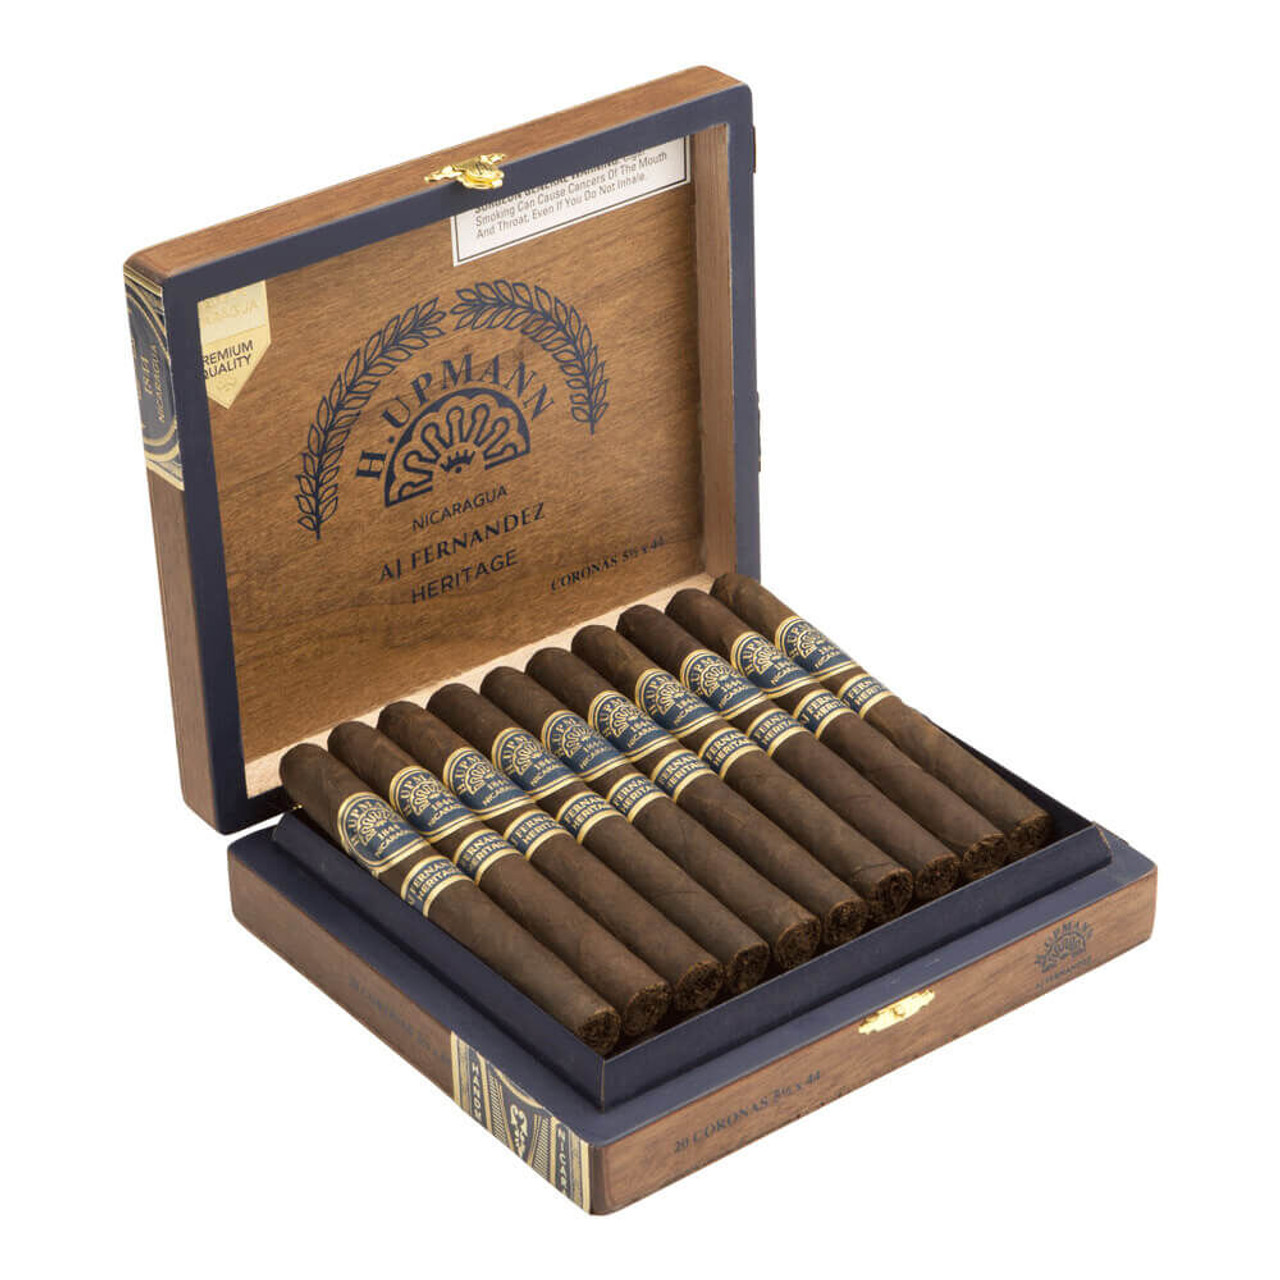 H. Upmann Nicaragua Heritage by AJ Fernandez Corona Cigars - 5 x 44 (Box of 20) Open